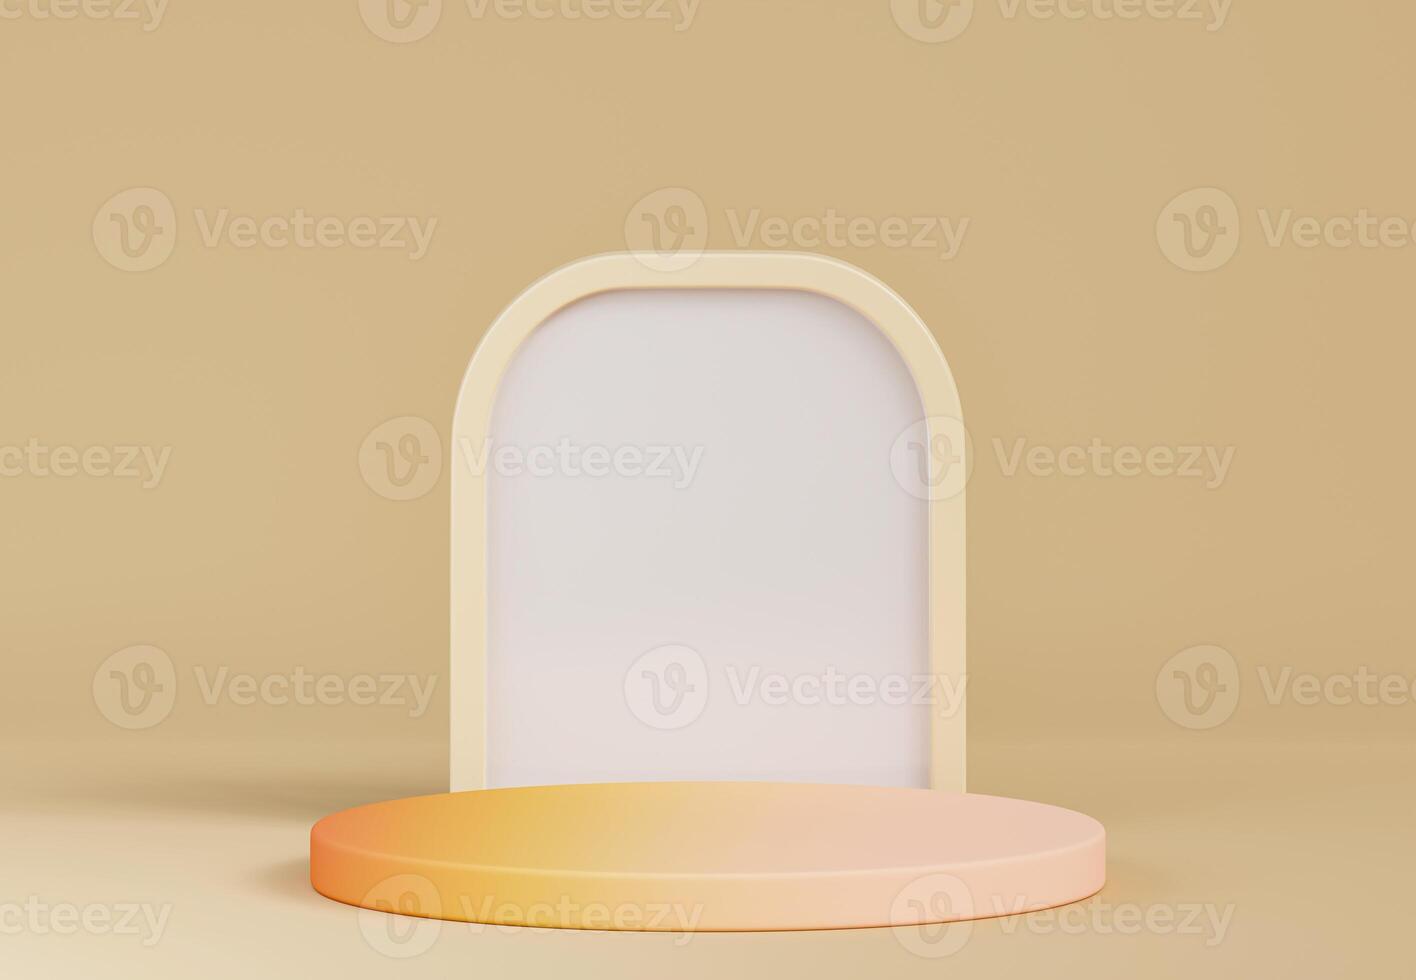 Realistic orange and beige, 3D cylinder stand podium. abstract geometric minimal scene mockup products display photo